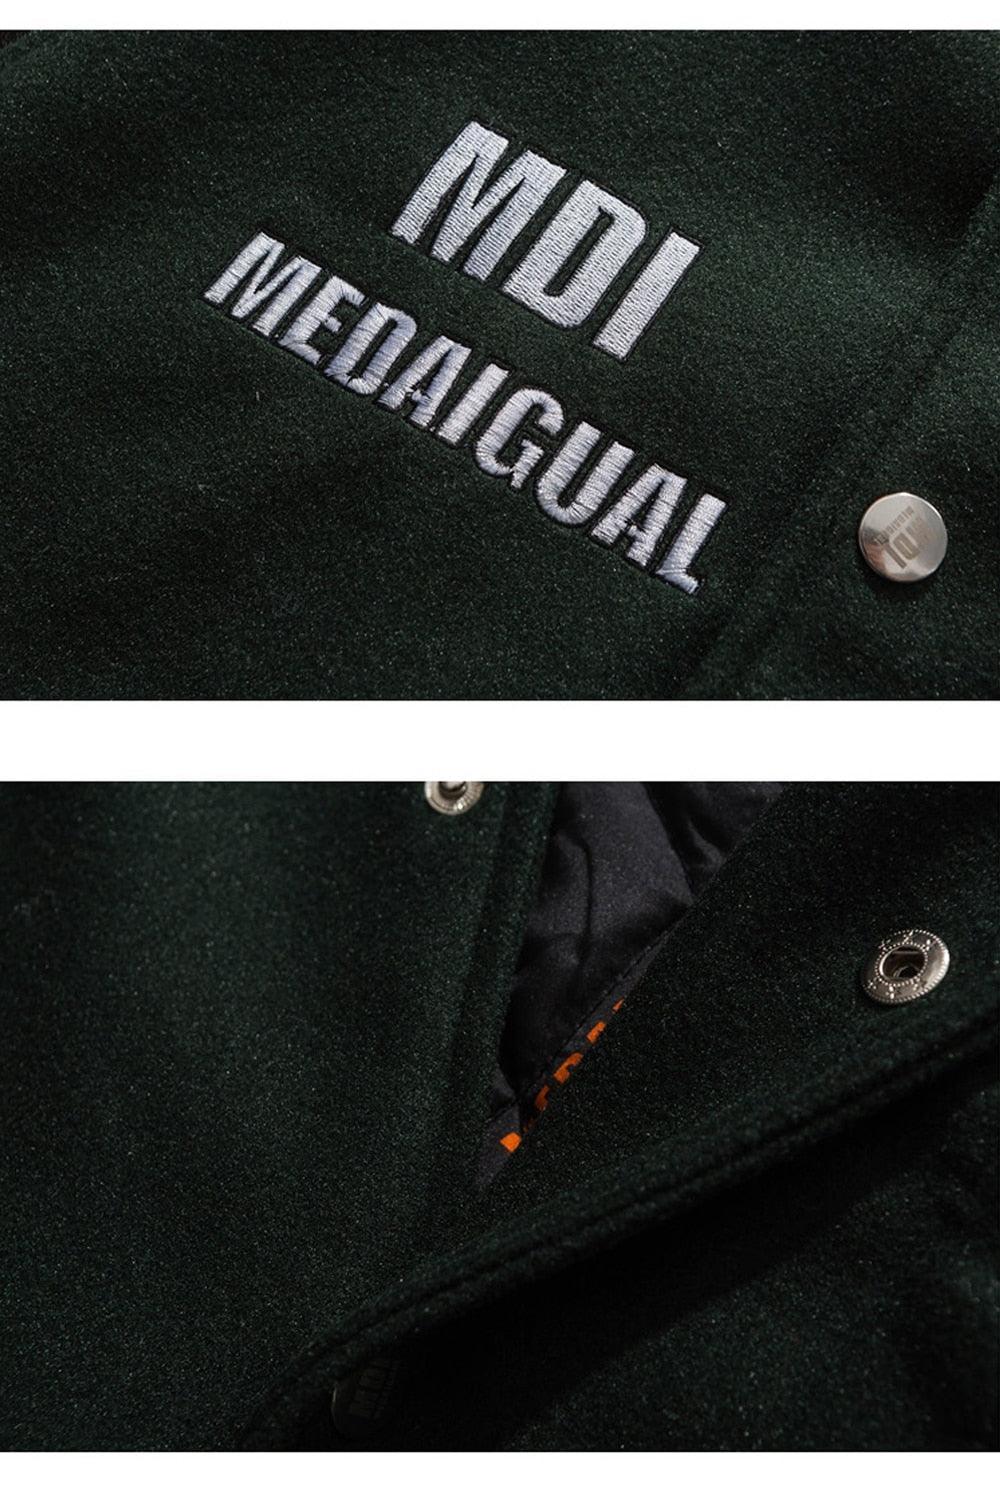 LUXENFY™ - MDI MEDAIGUAL Jacket luxenfy.com